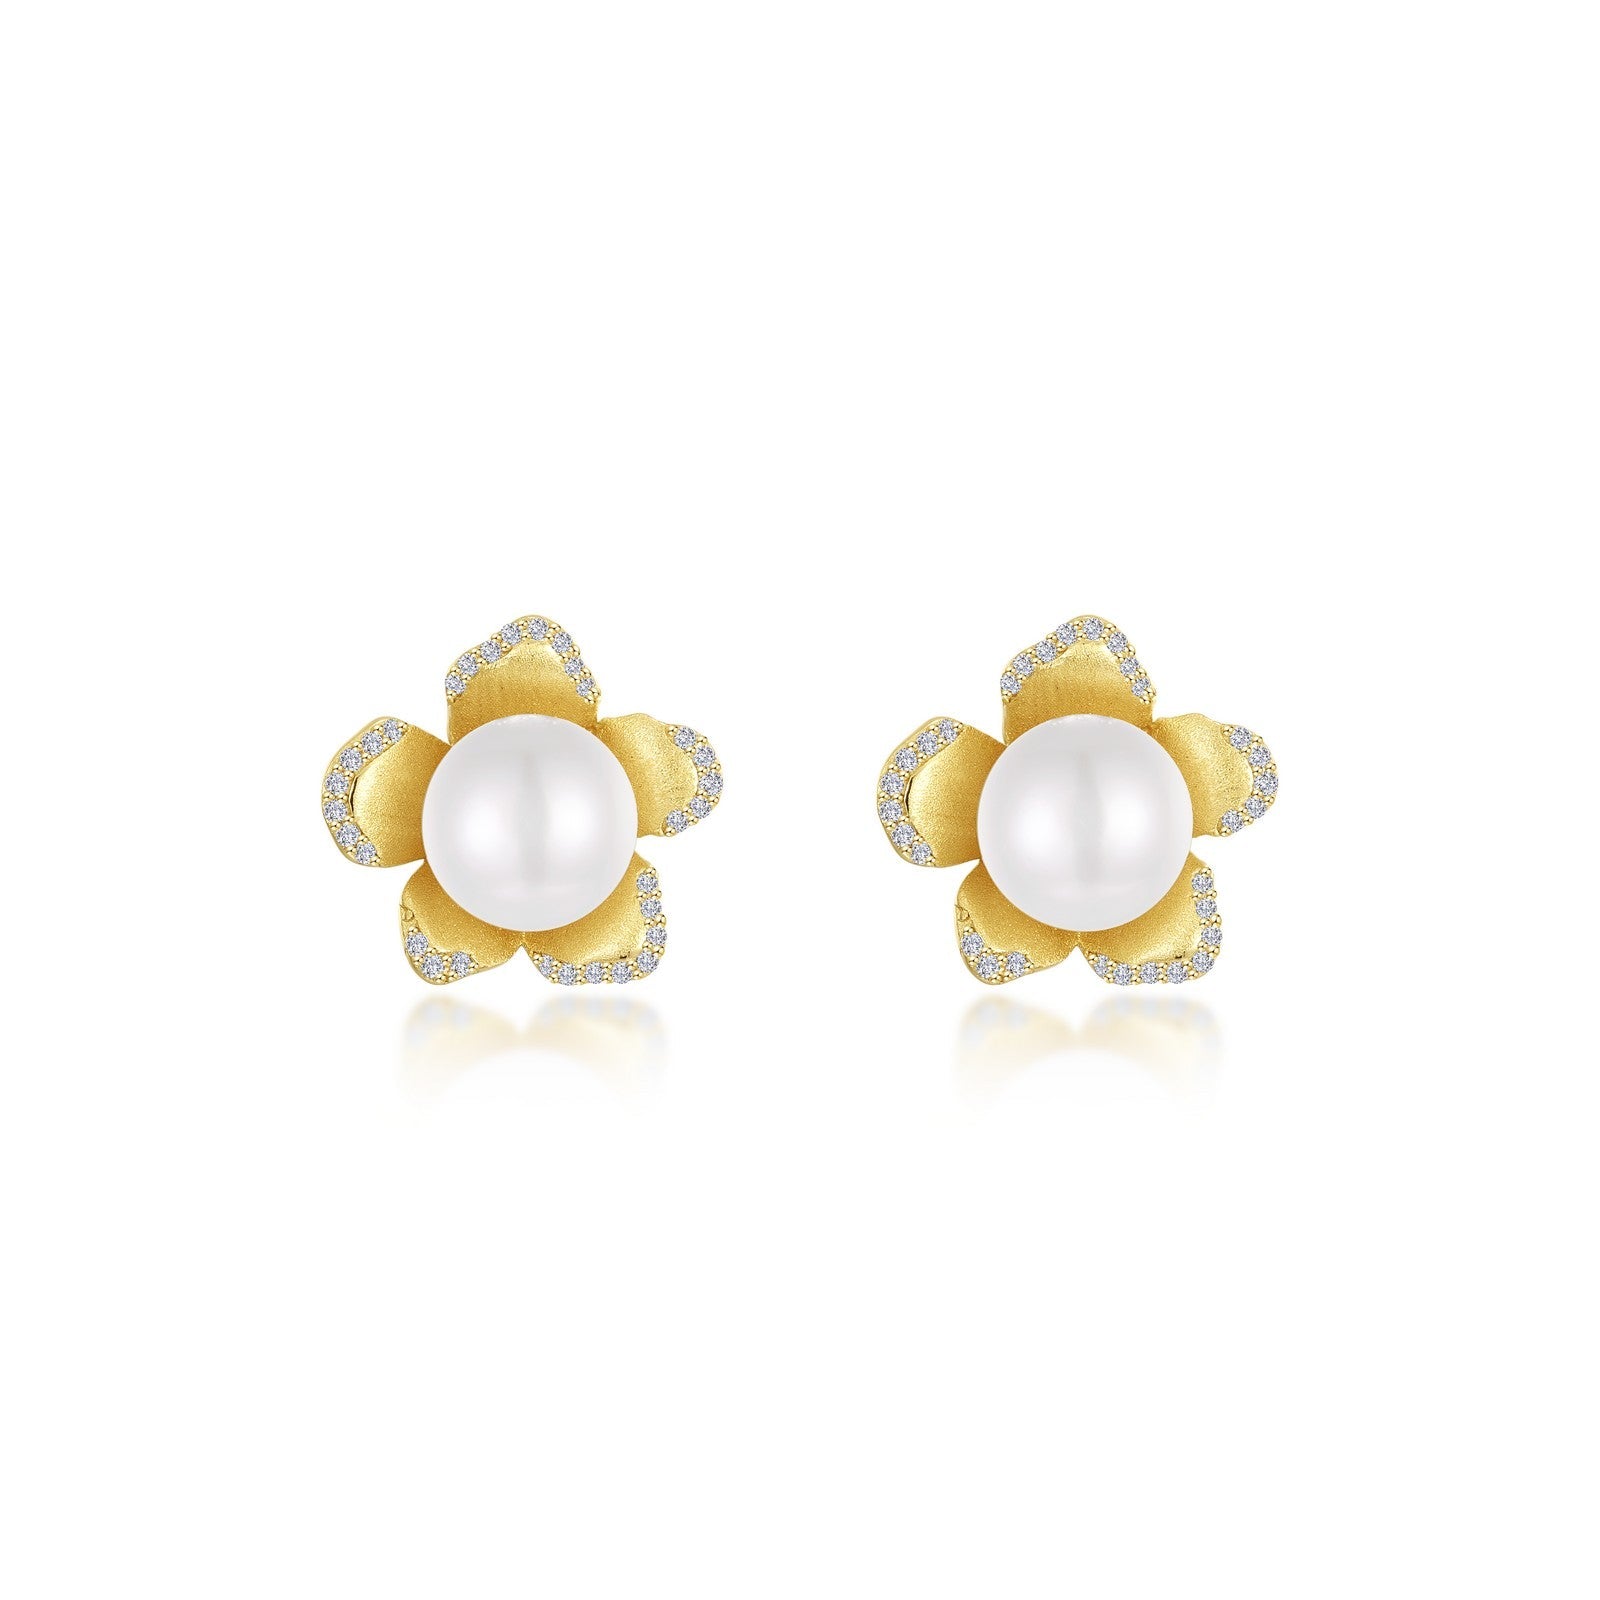 Cultured Freshwater Pearl Flower Earrings-E0589PLG